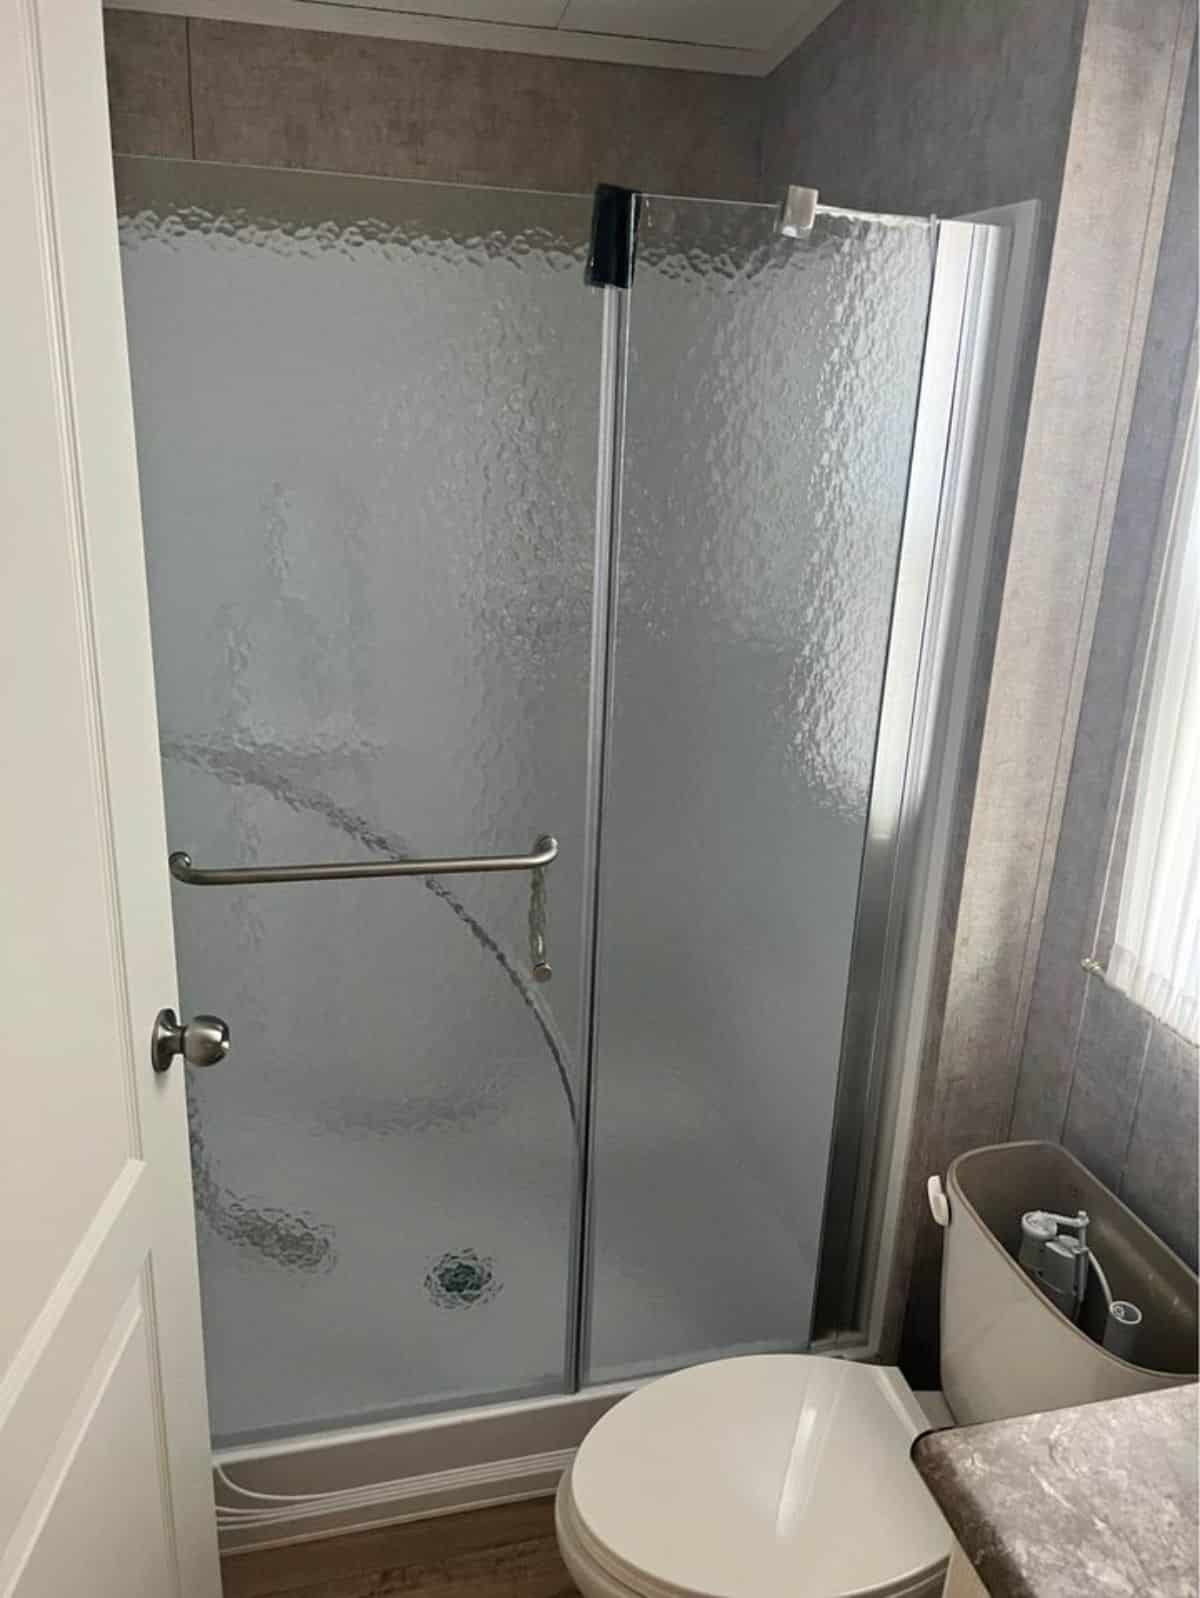 Standard toilet and separate shower area with glass door in bathroom